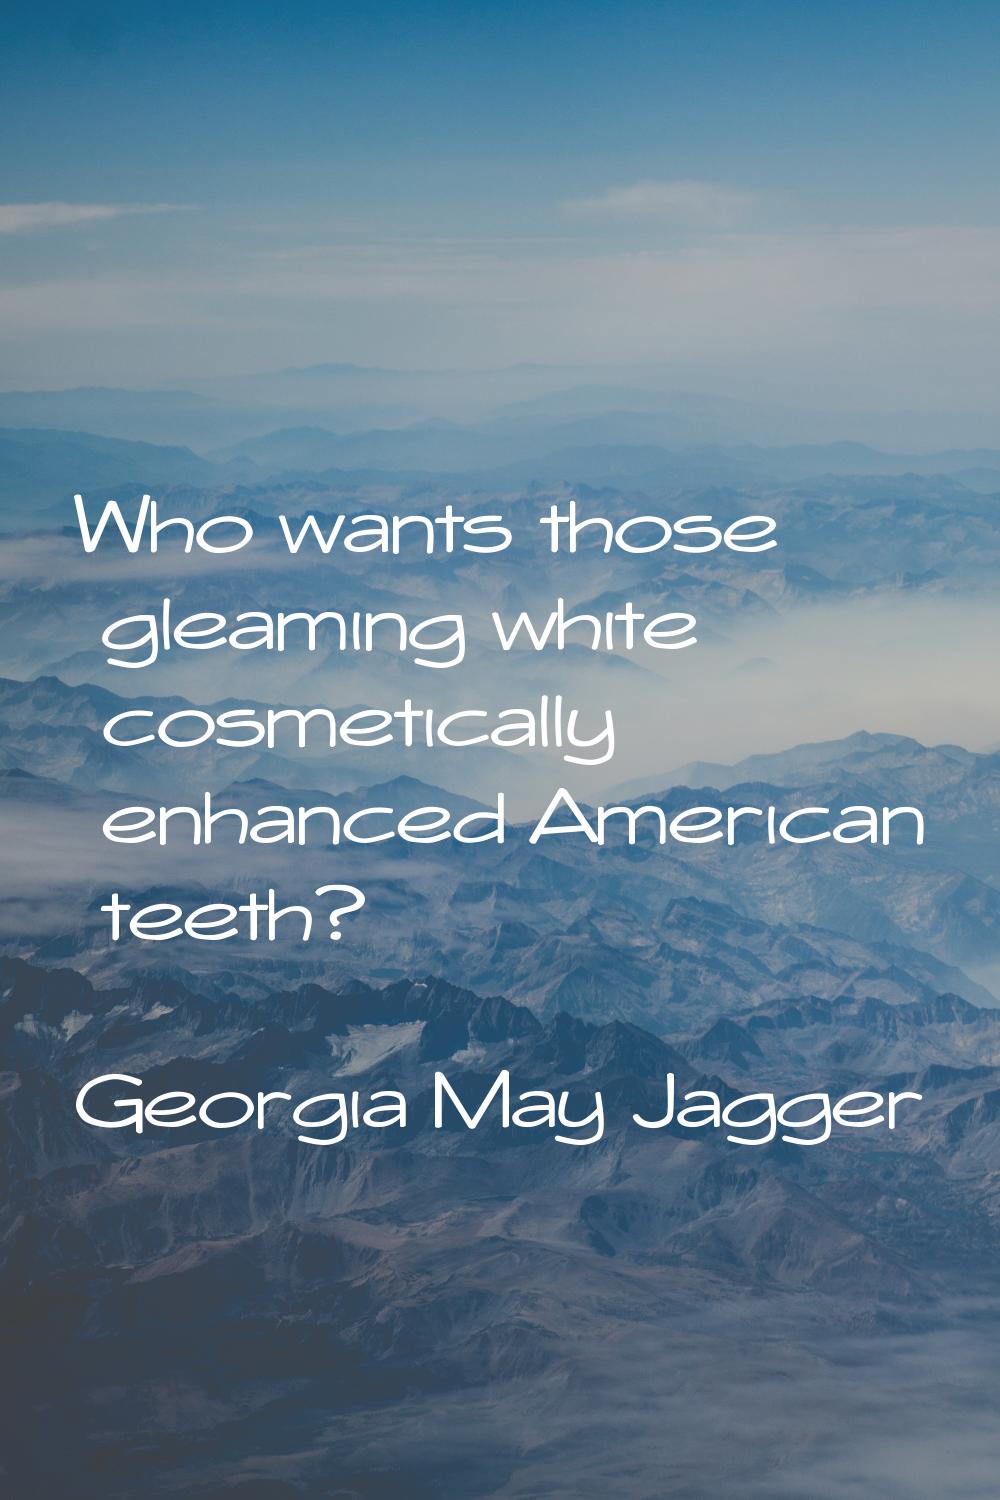 Who wants those gleaming white cosmetically enhanced American teeth?